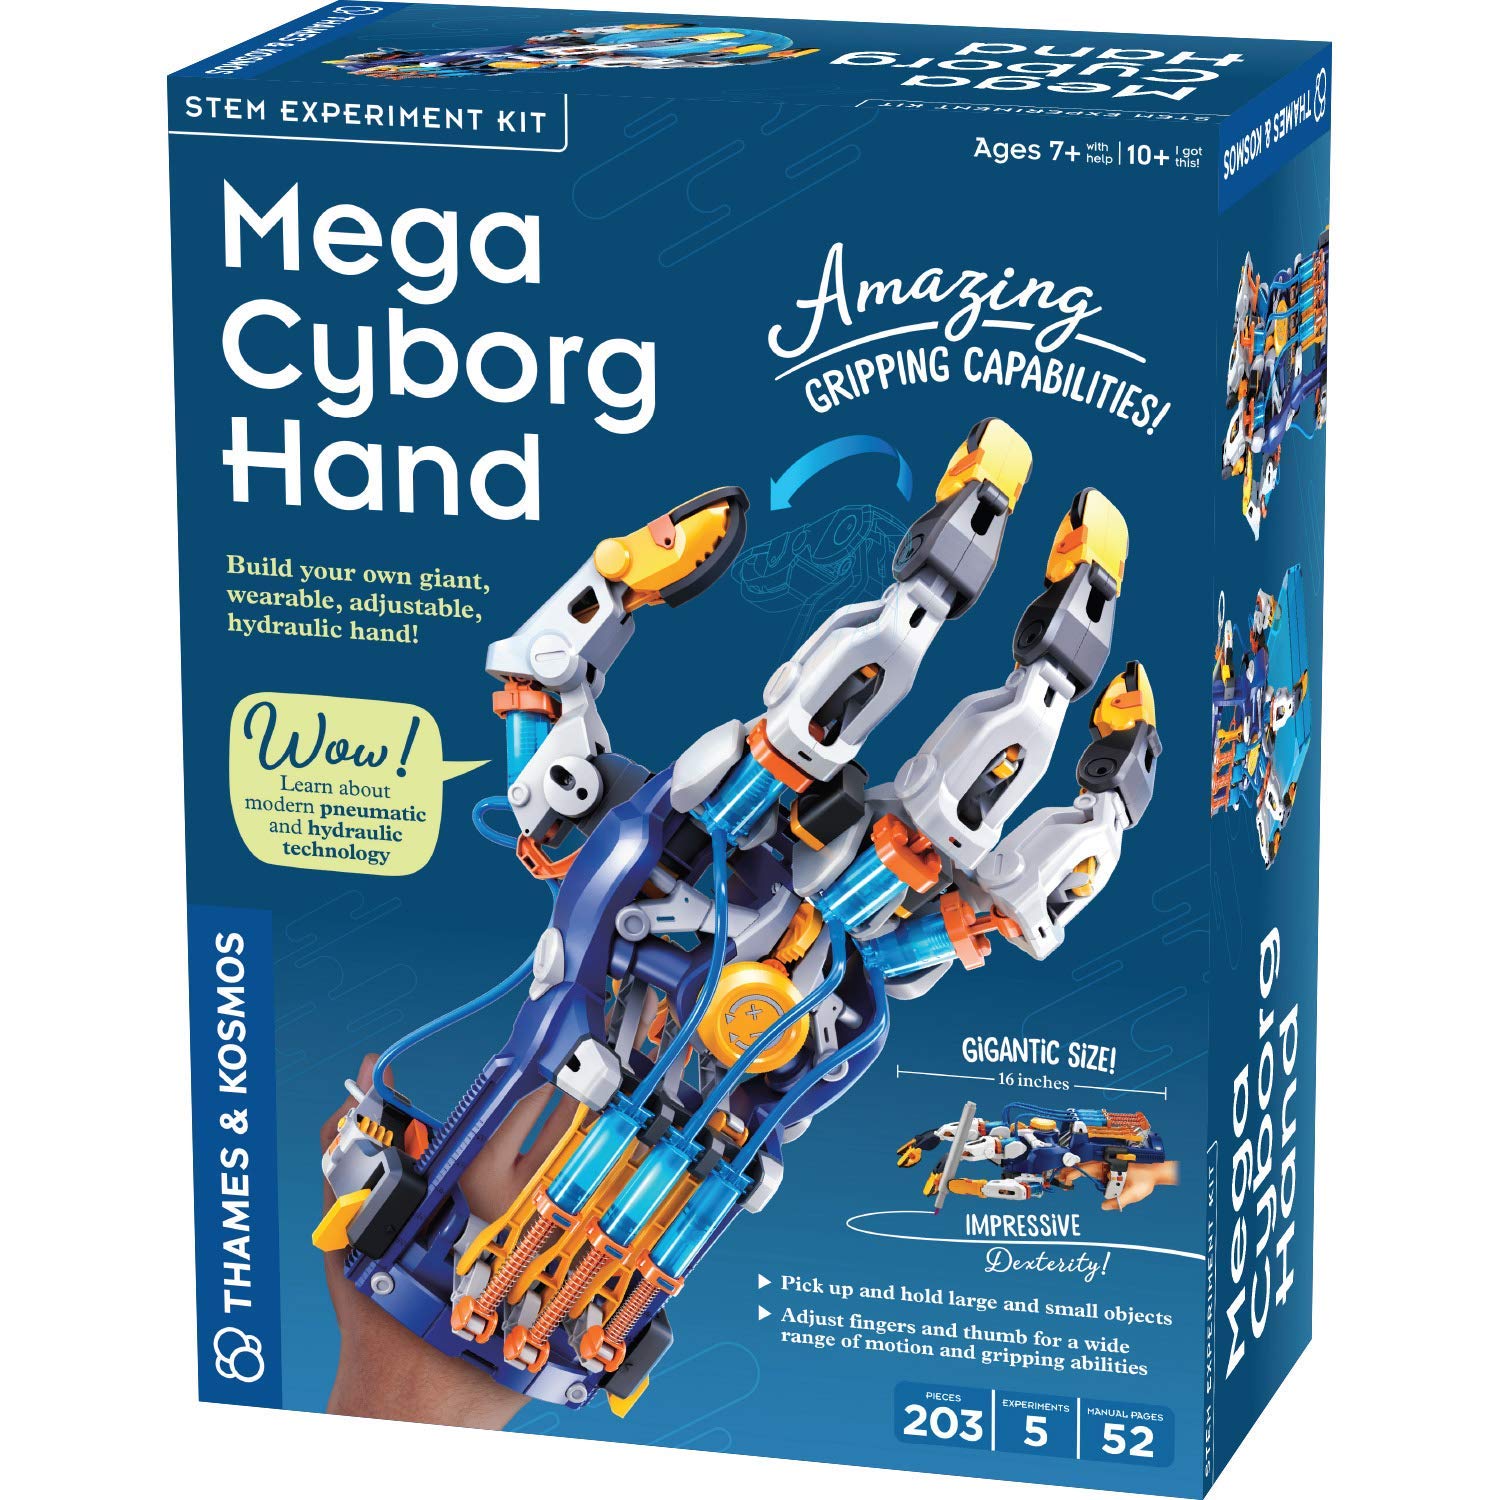 Thames & Kosmos Mega Cyborg Adjustable Hydraulic Hand STEM Experiment Kit  $26.92 + Free Shipping w/ Prime or on $35+